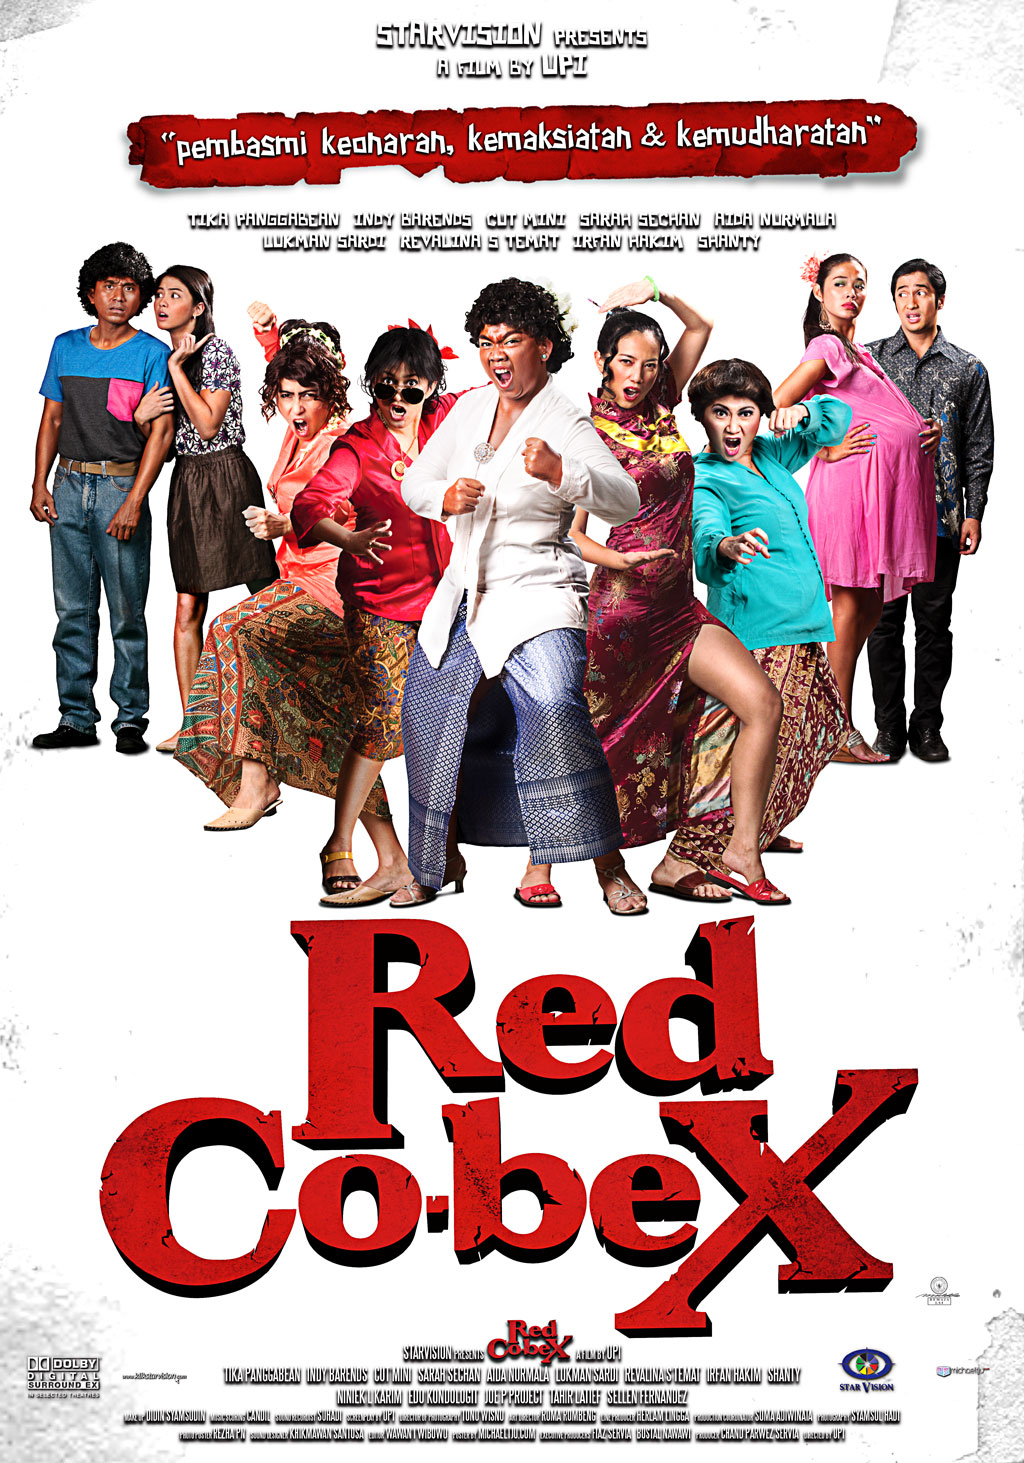 Red CobeX movie